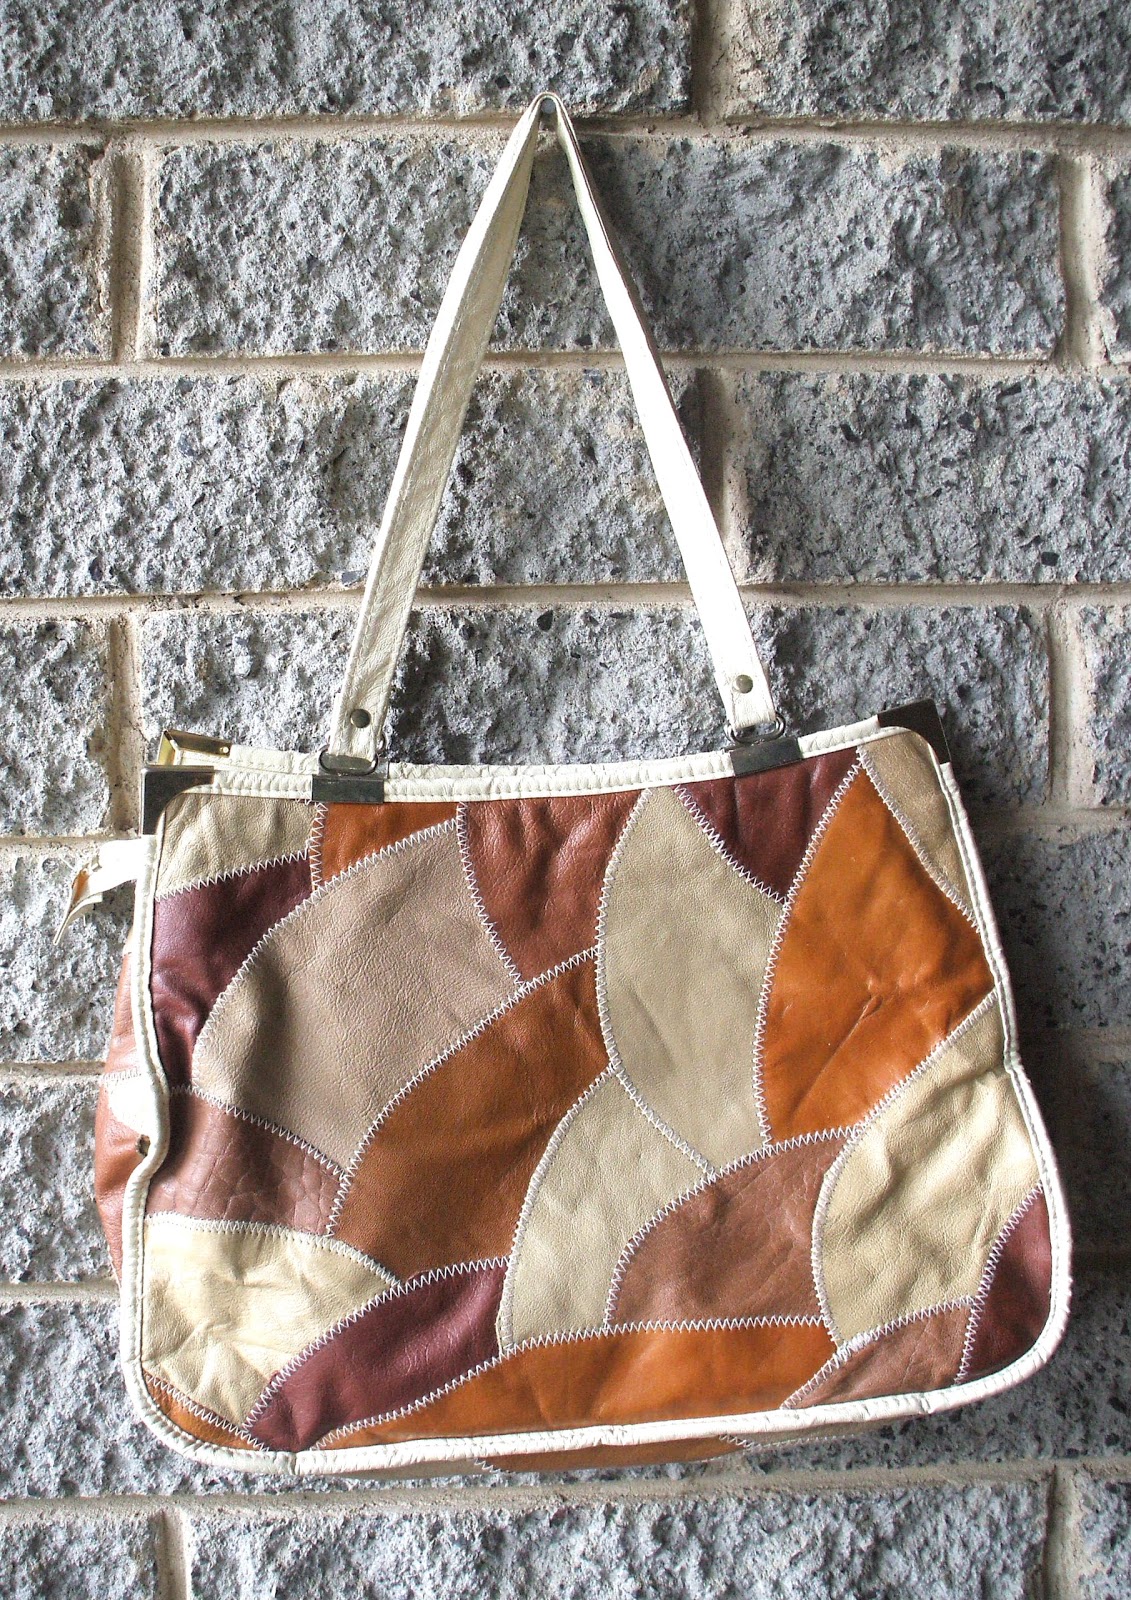 Recycled,Repurposed,Renewed.: Handbag Refashion